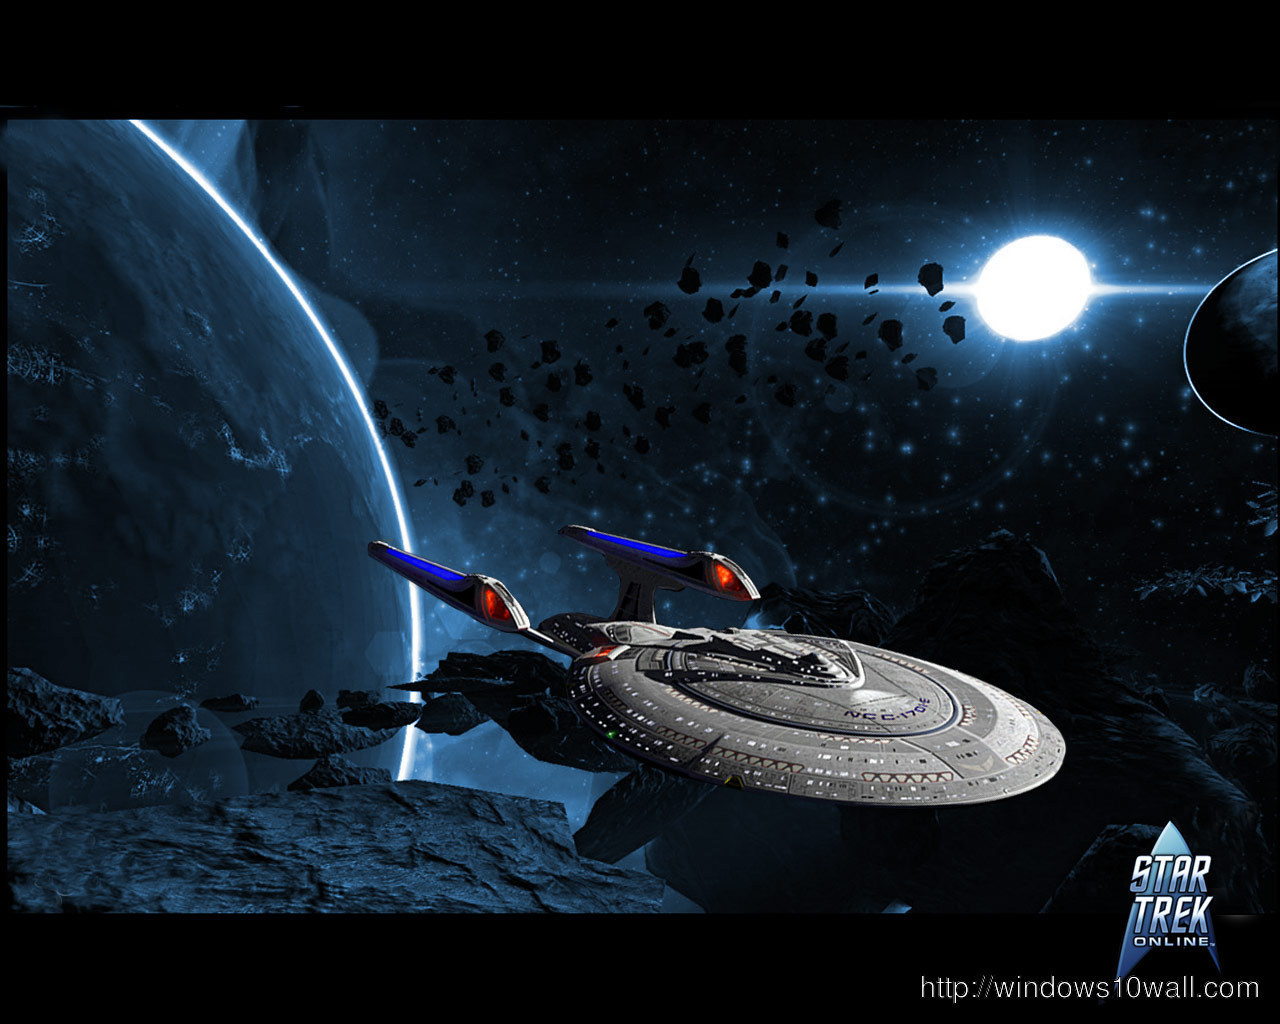 Star Trek Online Wallpaper free download for pc